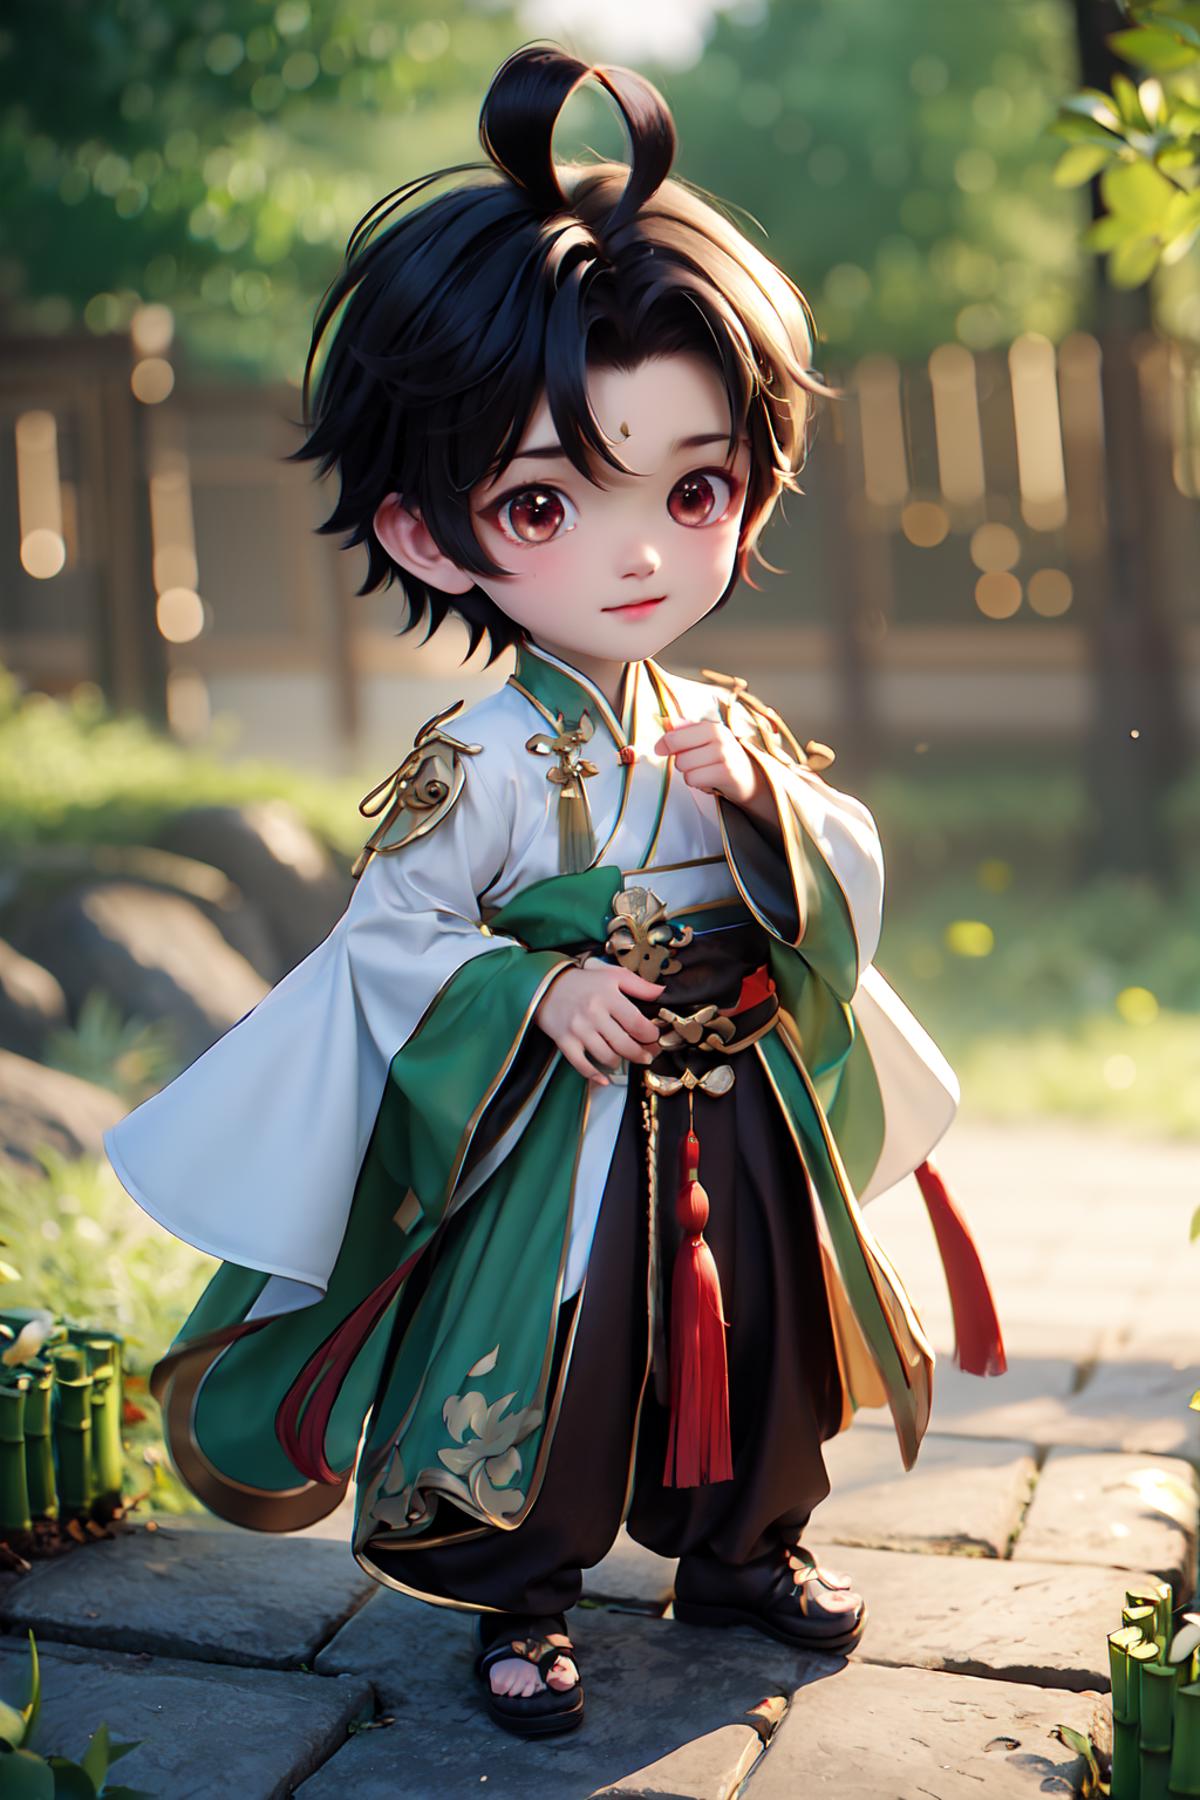 国风萌玩 | Chinese style cute doll image by XiongSan